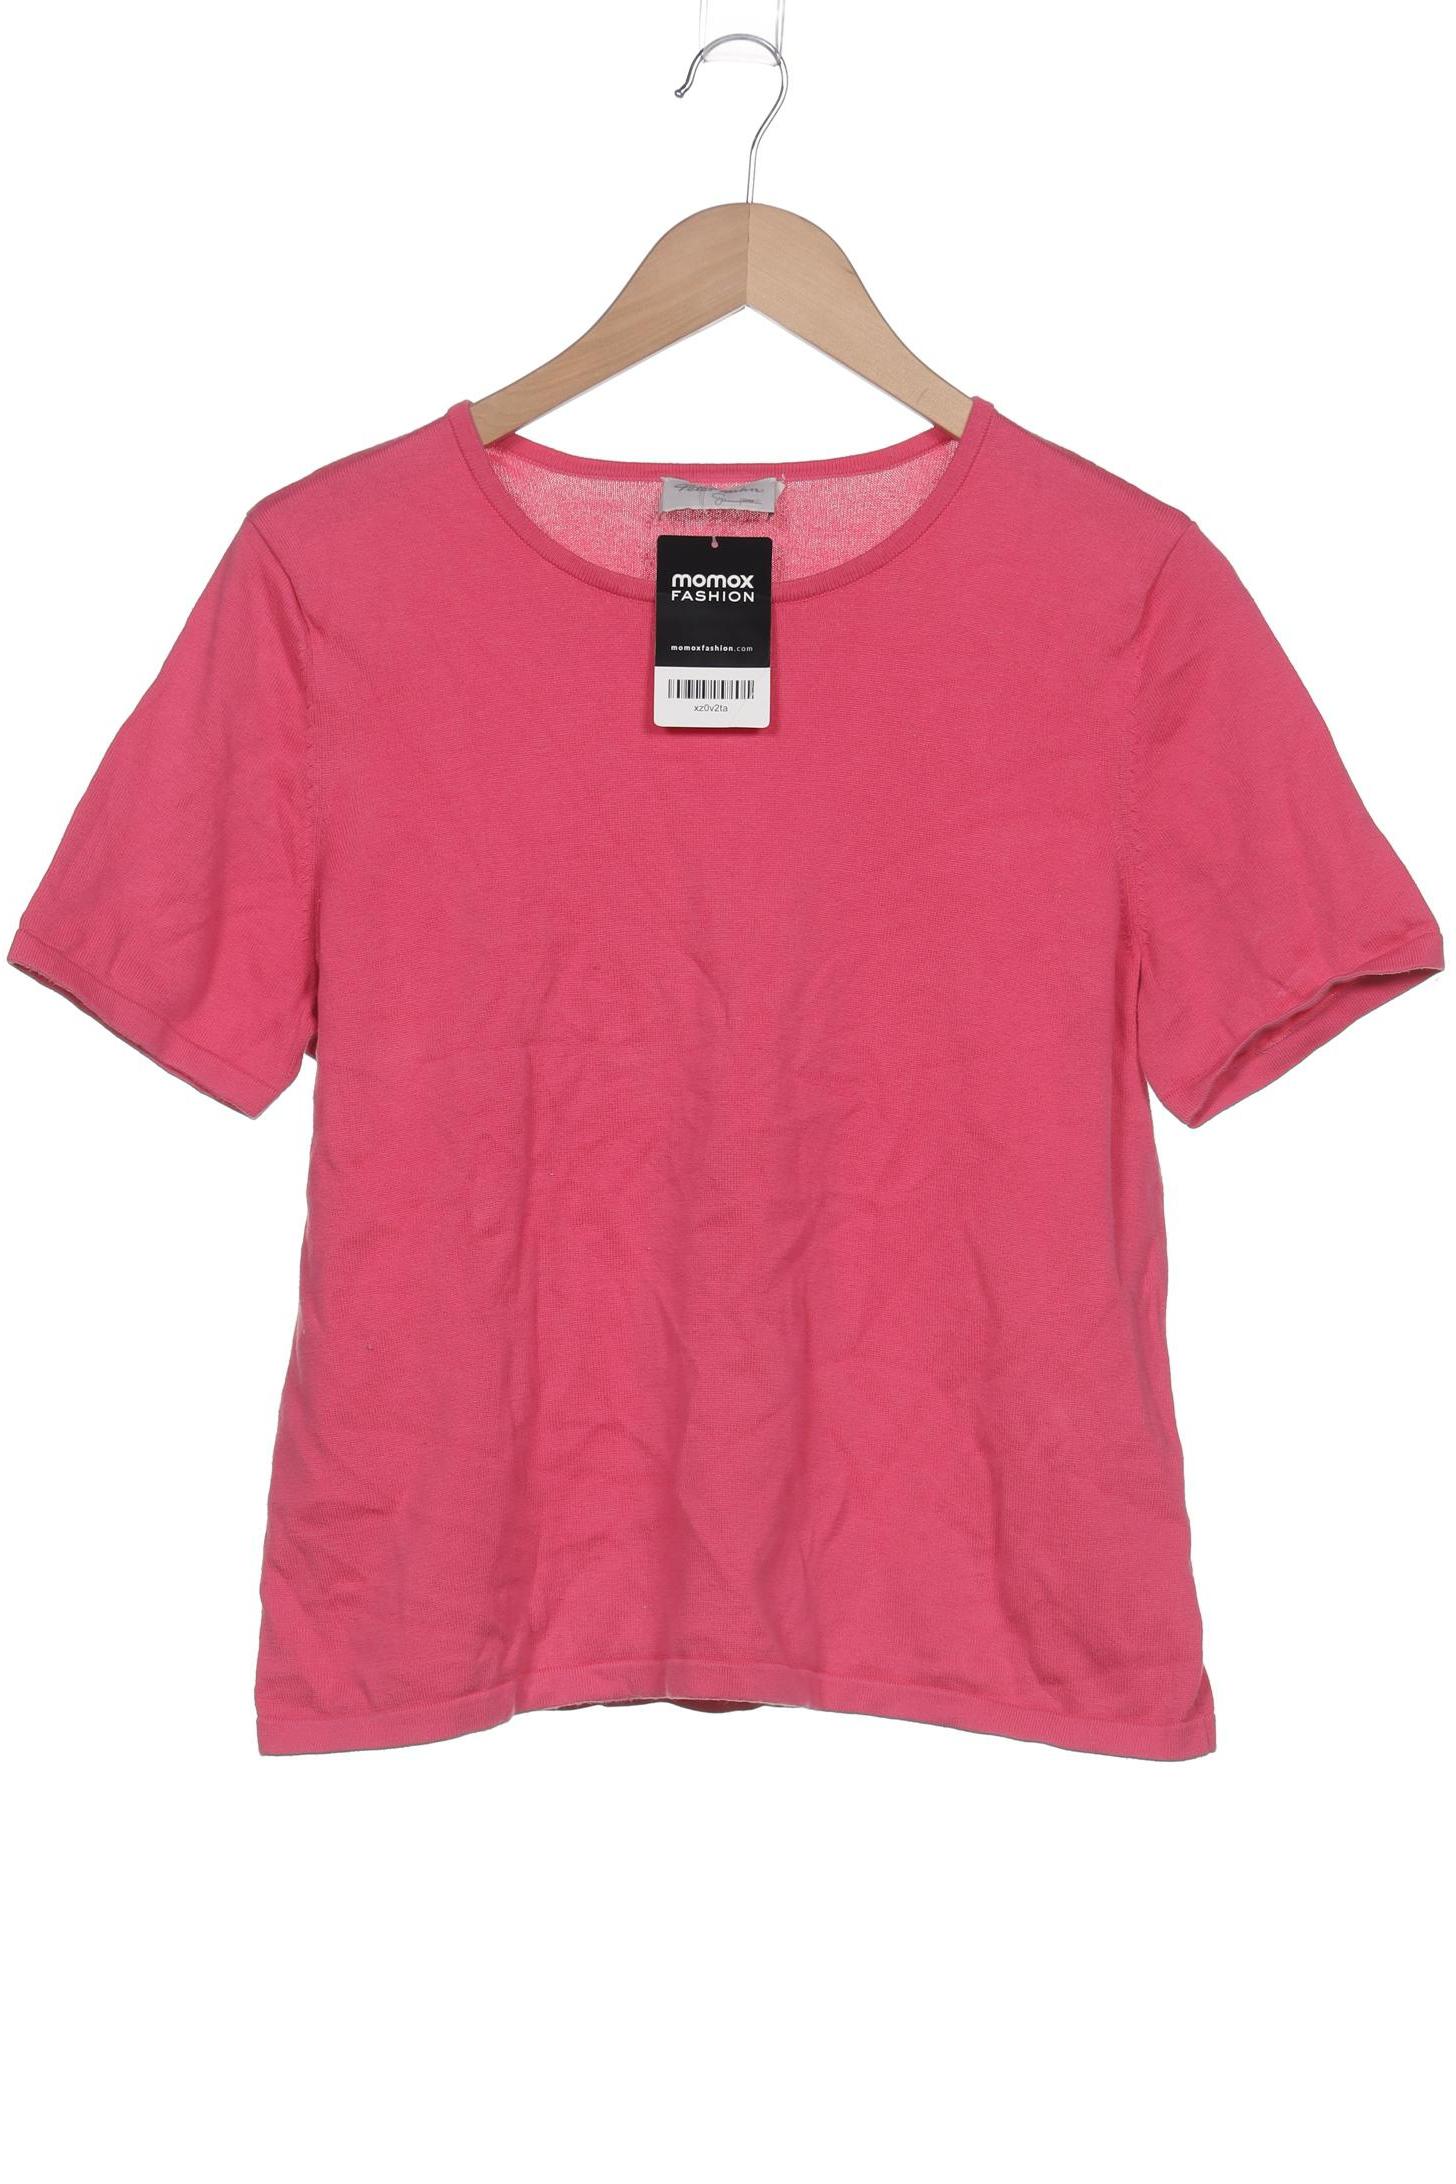 Peter Hahn Damen T-Shirt, pink, Gr. 44 von Peter Hahn